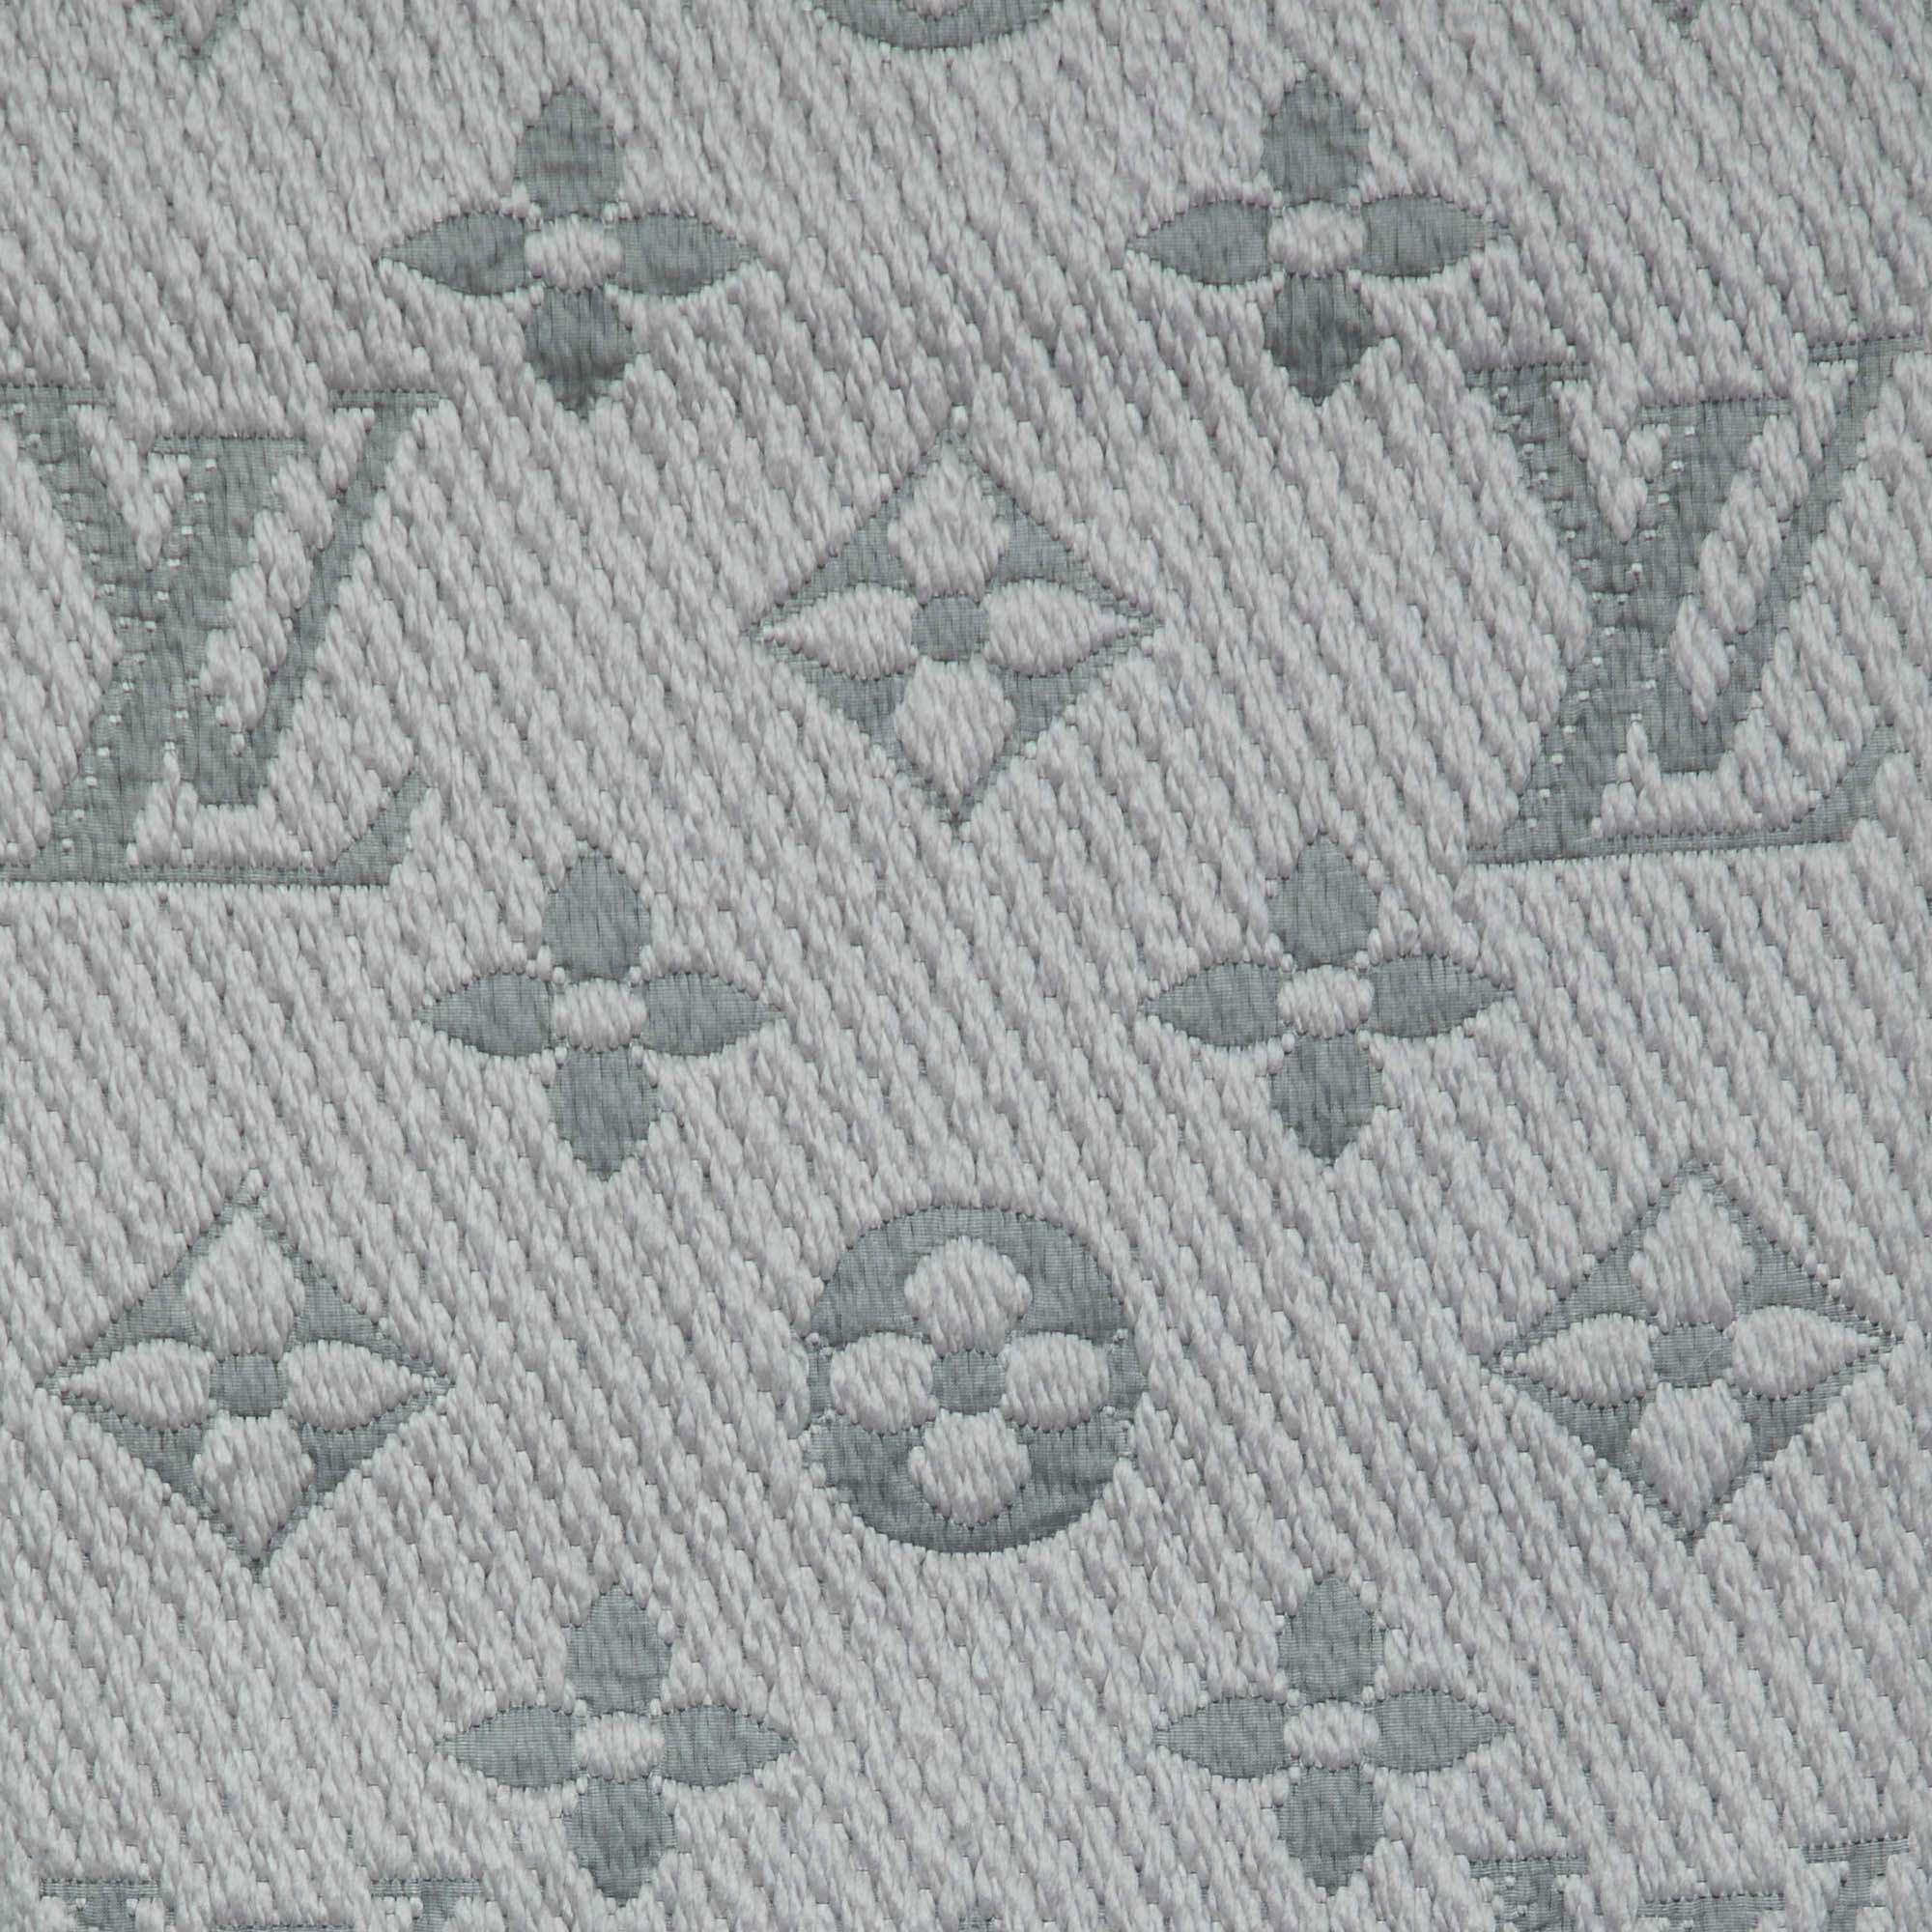 Louis Vuitton logomania scarf in pearl – Lady Clara's Collection